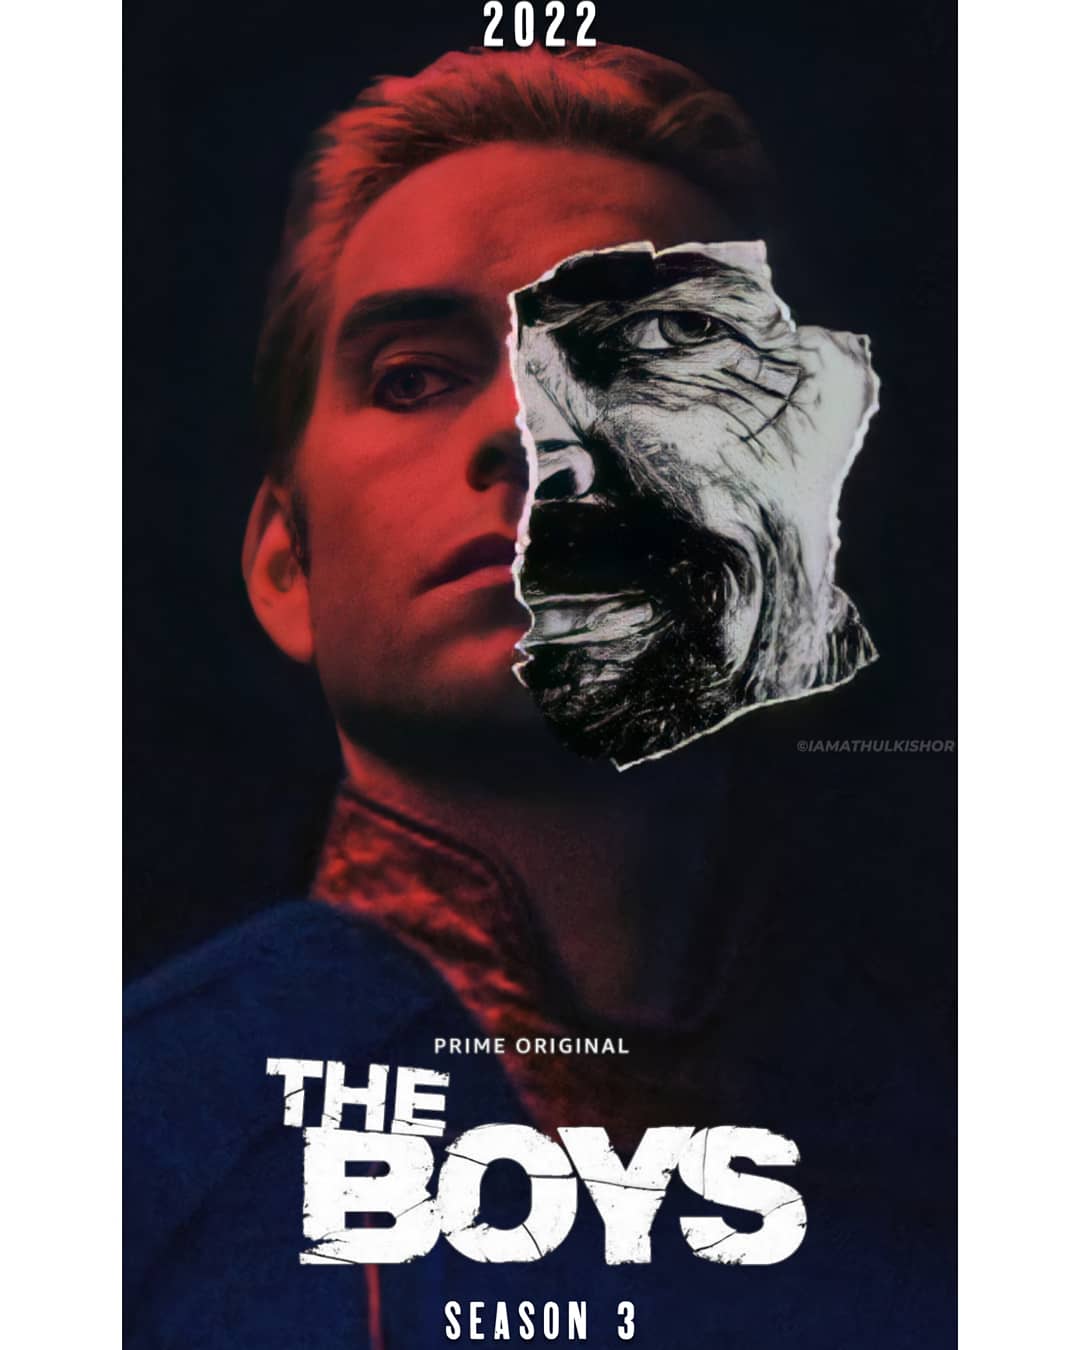 amazon web series - The Boys season 3